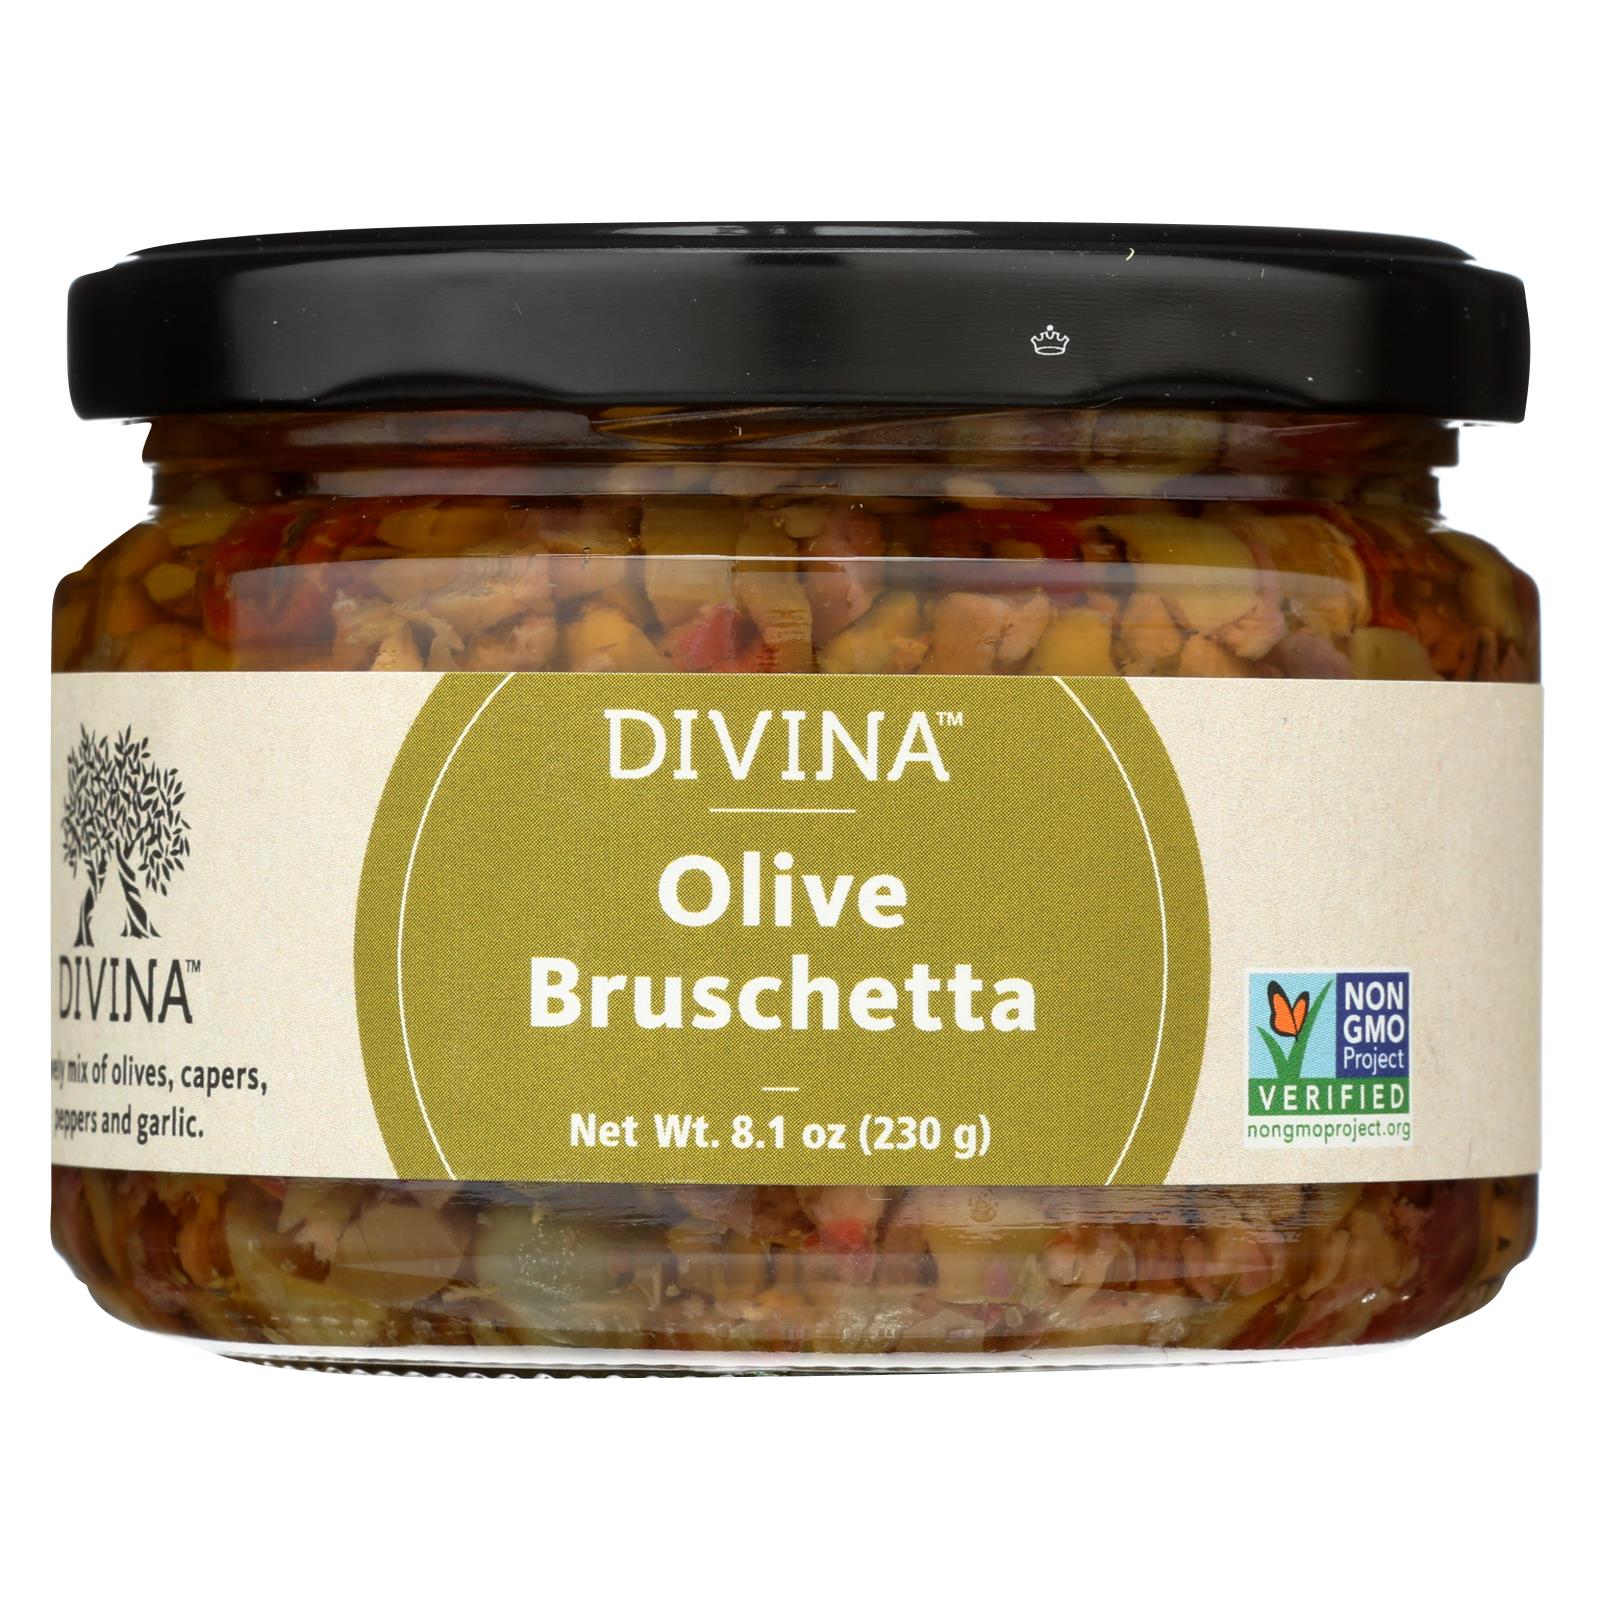 Divina - Olive Bruschetta - 6개 묶음상품 - 8.1 oz.